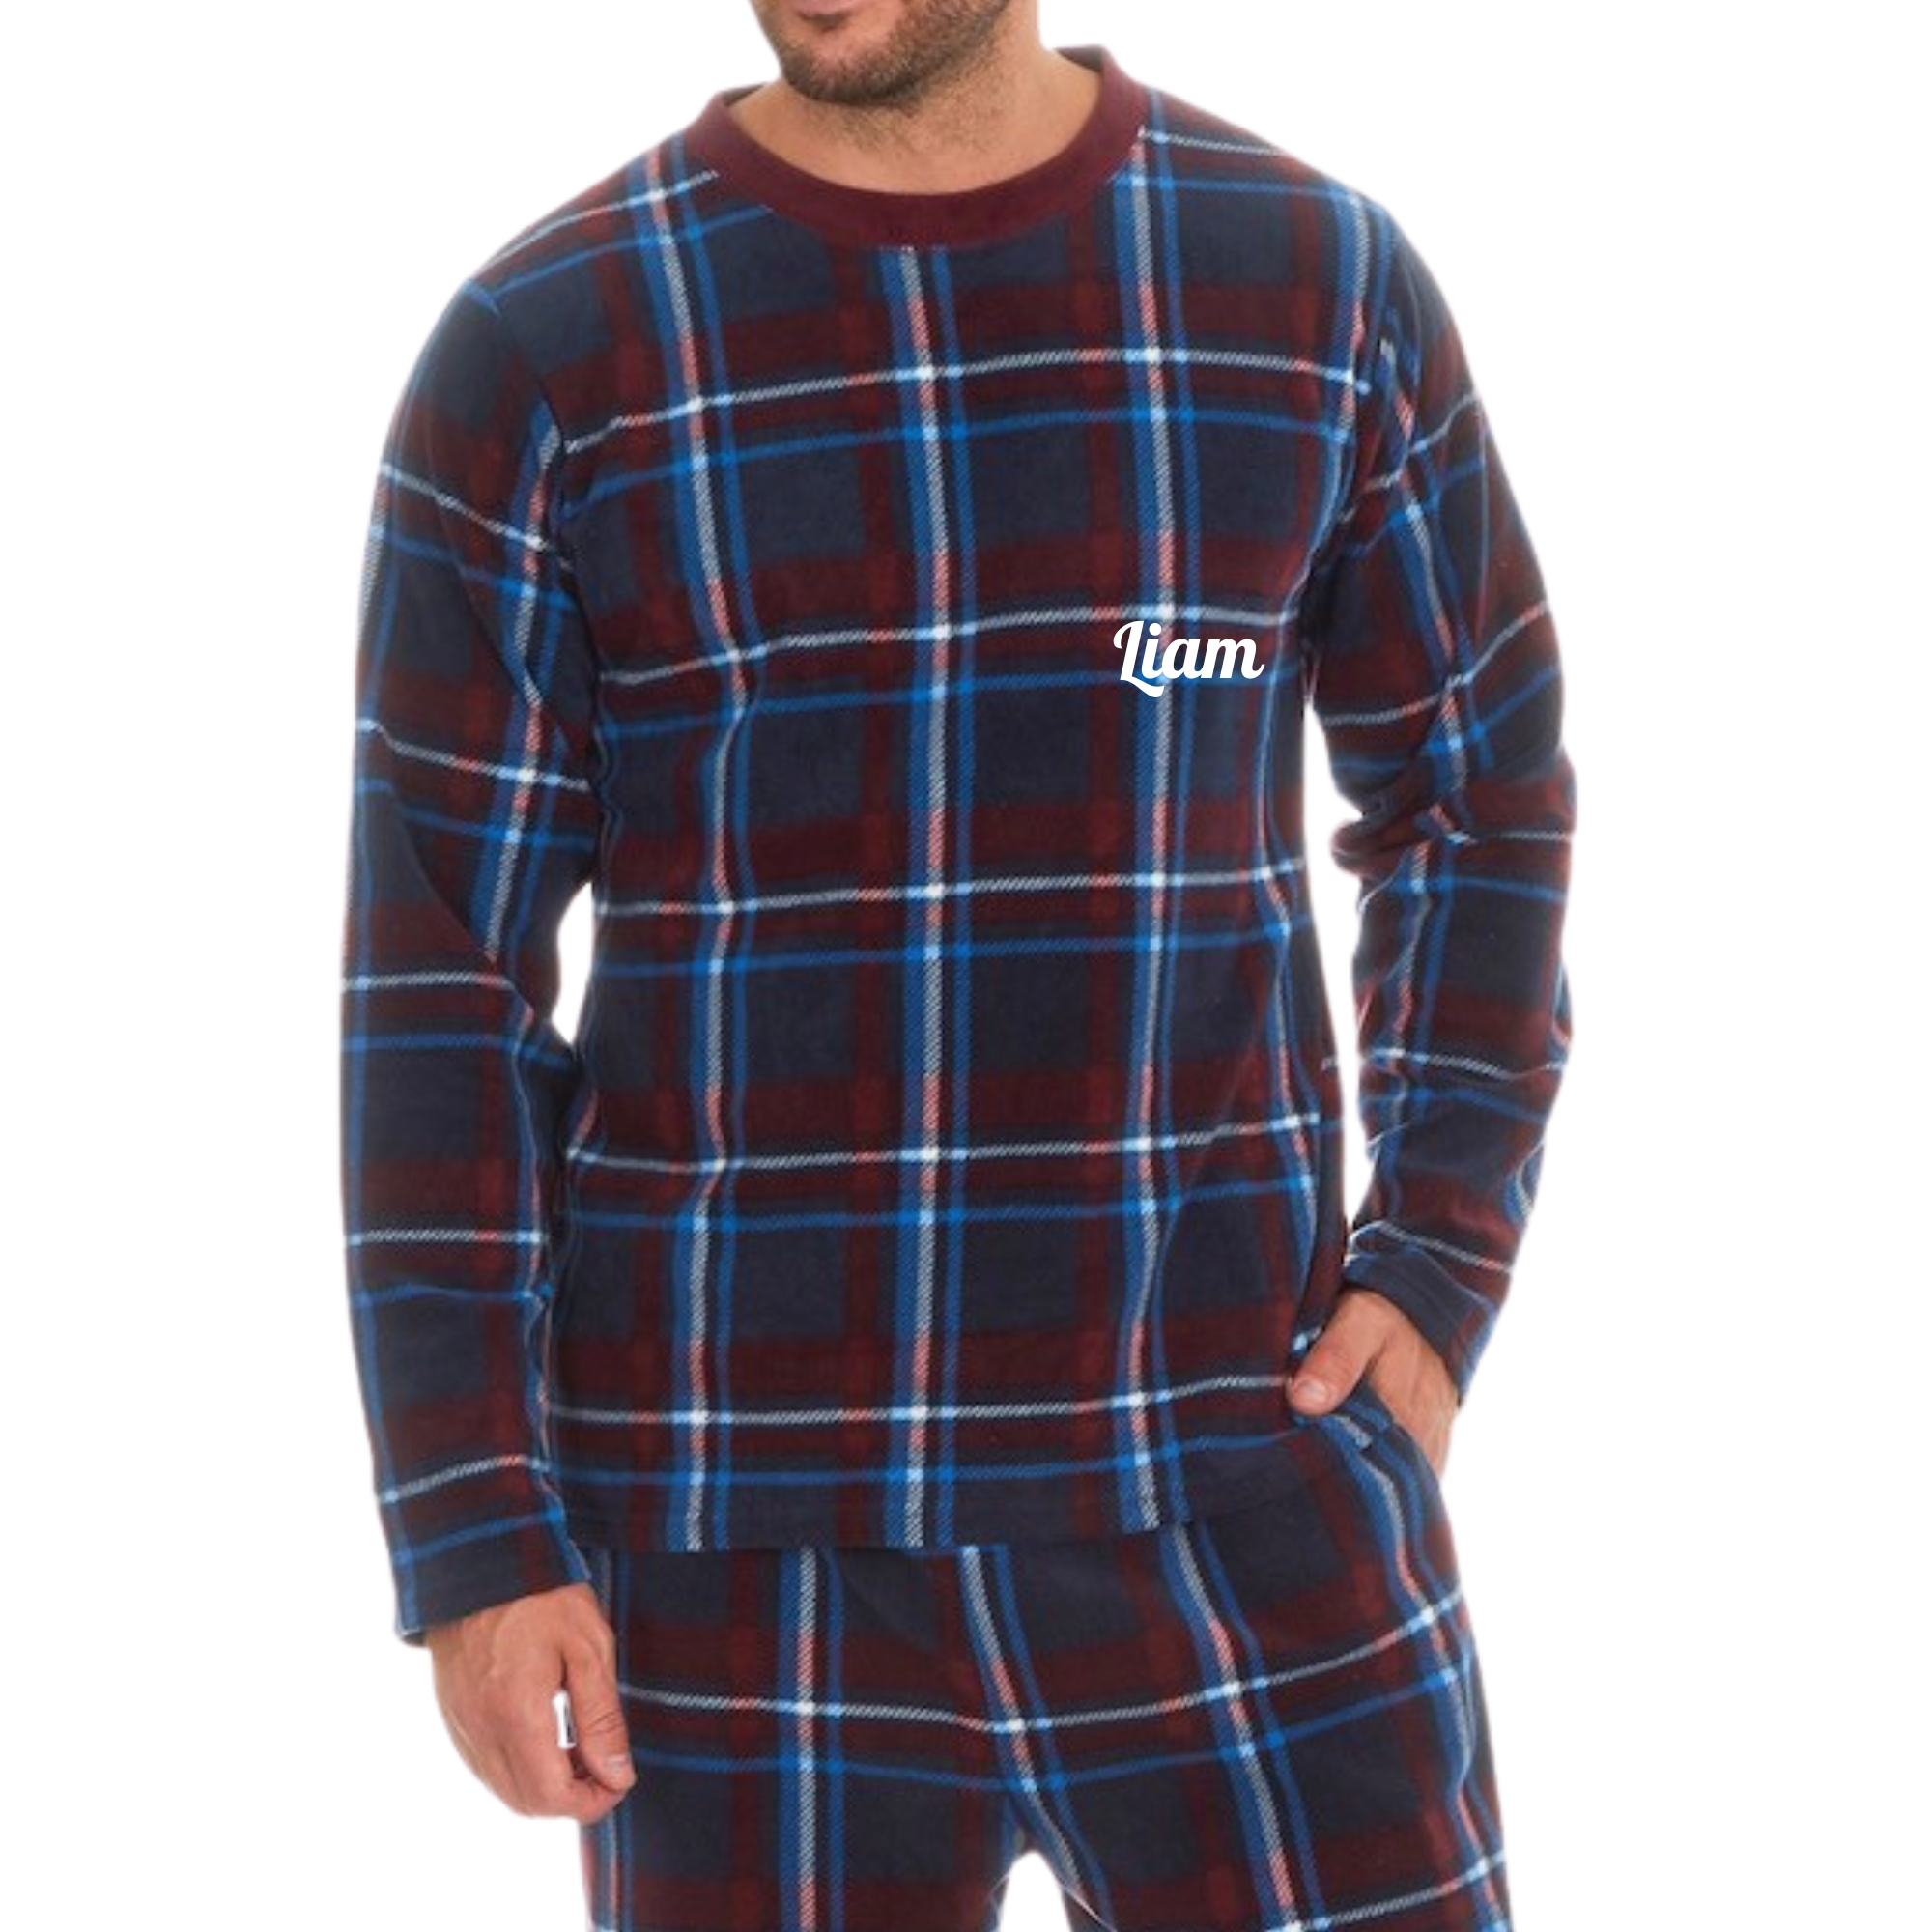 Black Check Fleece Pyjamas